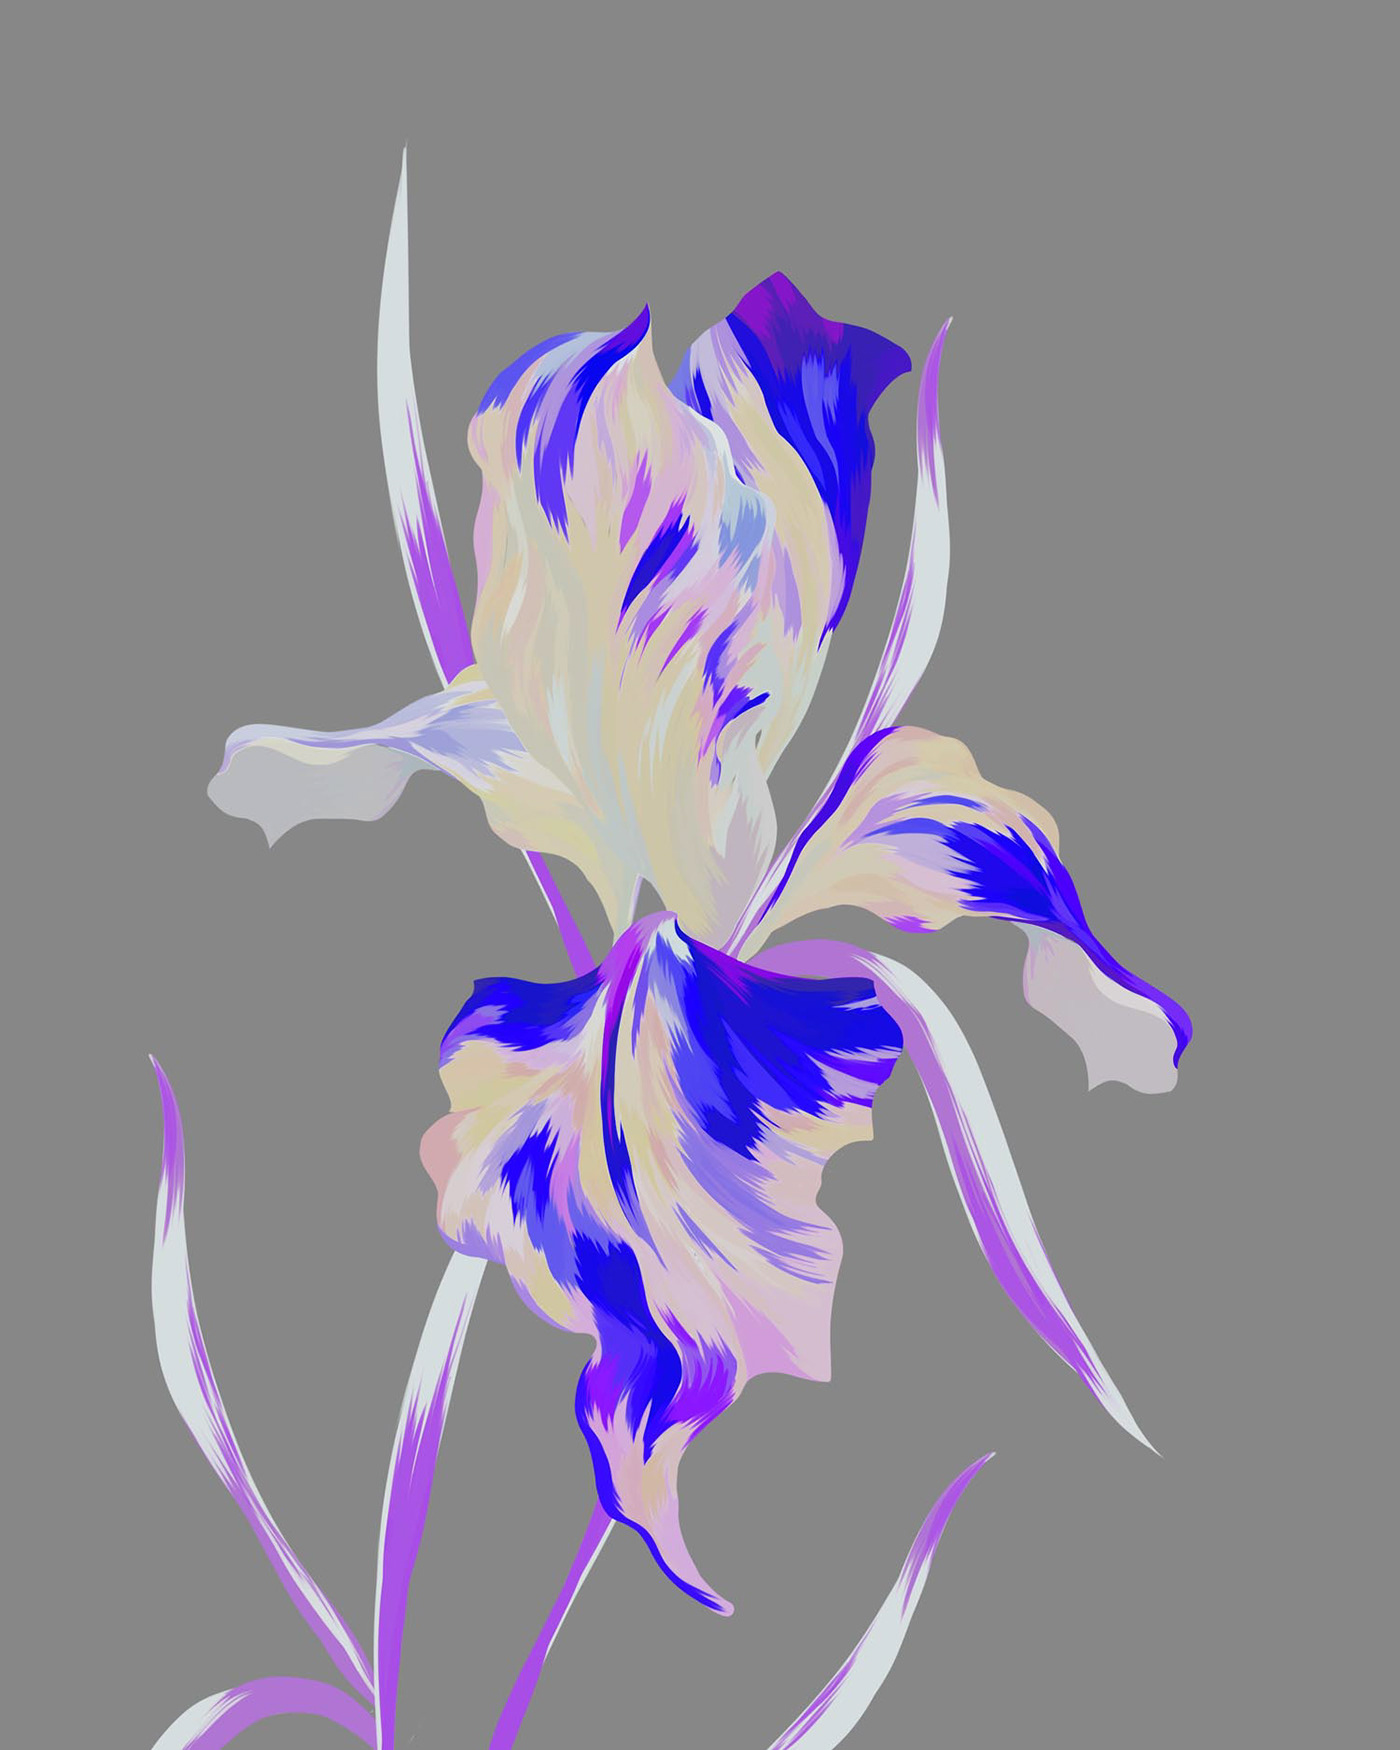 3dfashion Clo3d Digital Art  digital illustration floral ILLUSTRATION  painting   pattern surface design textile